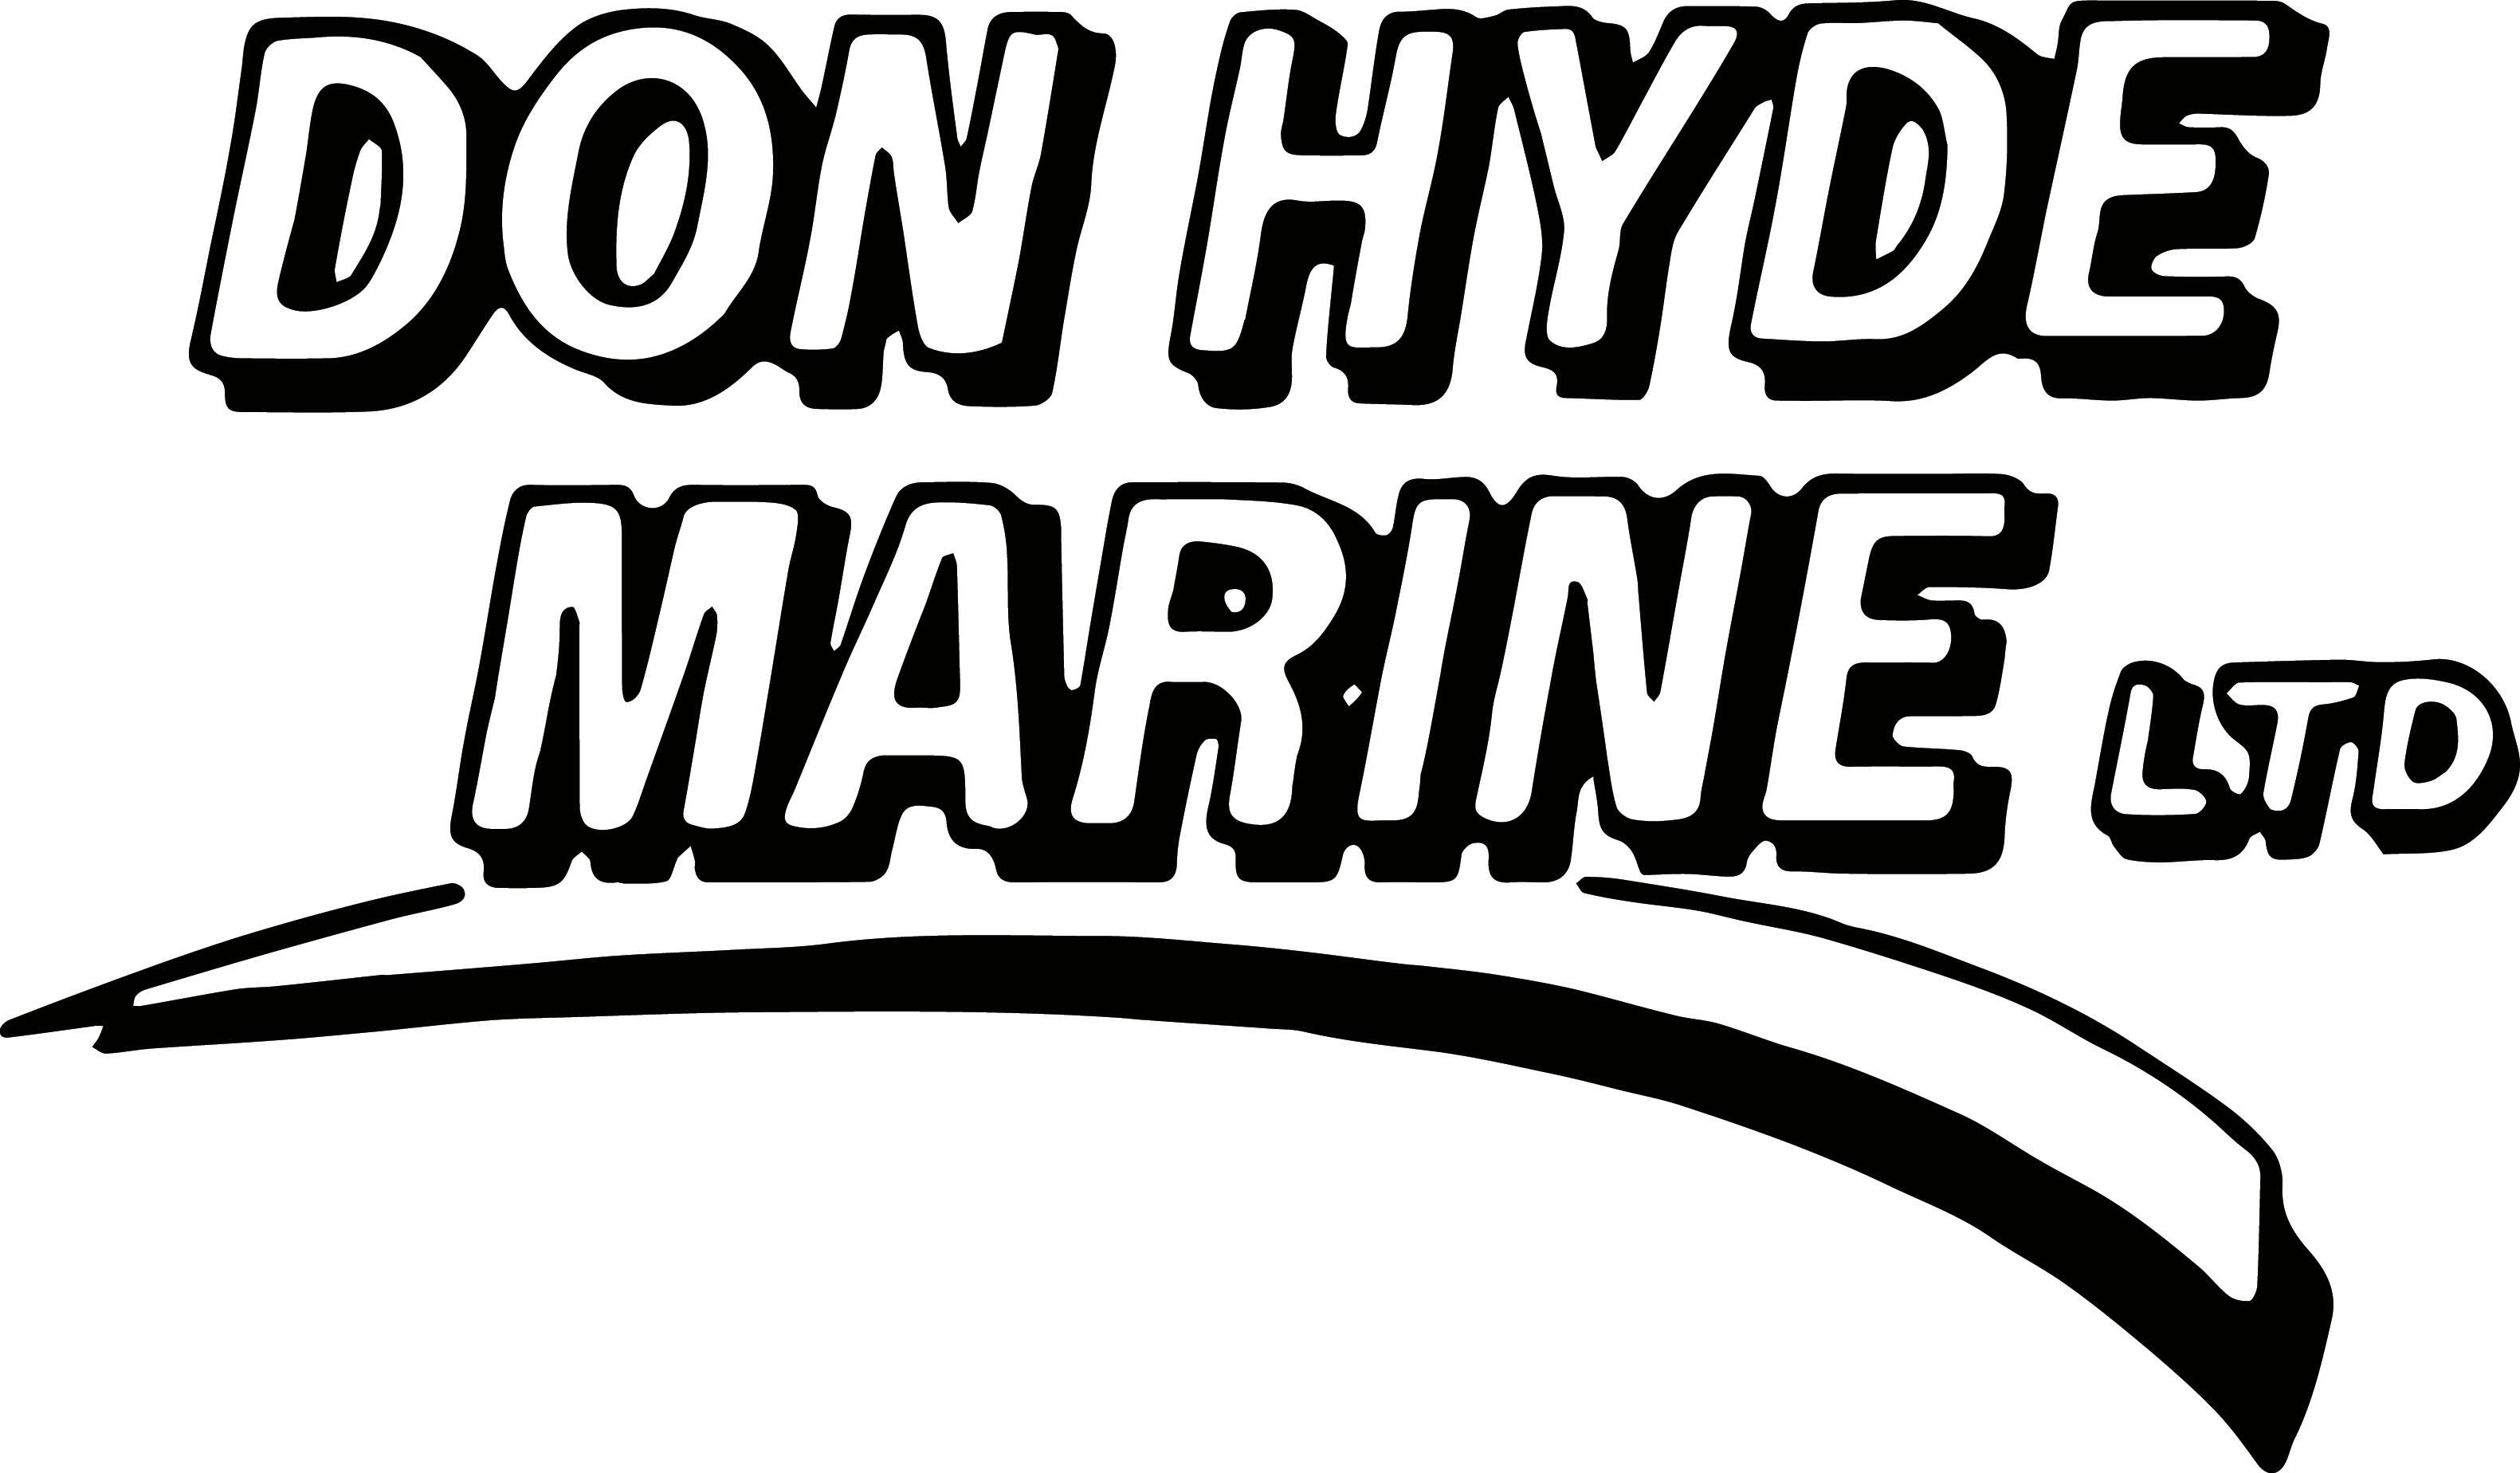 Don Hyde Marine Ltd